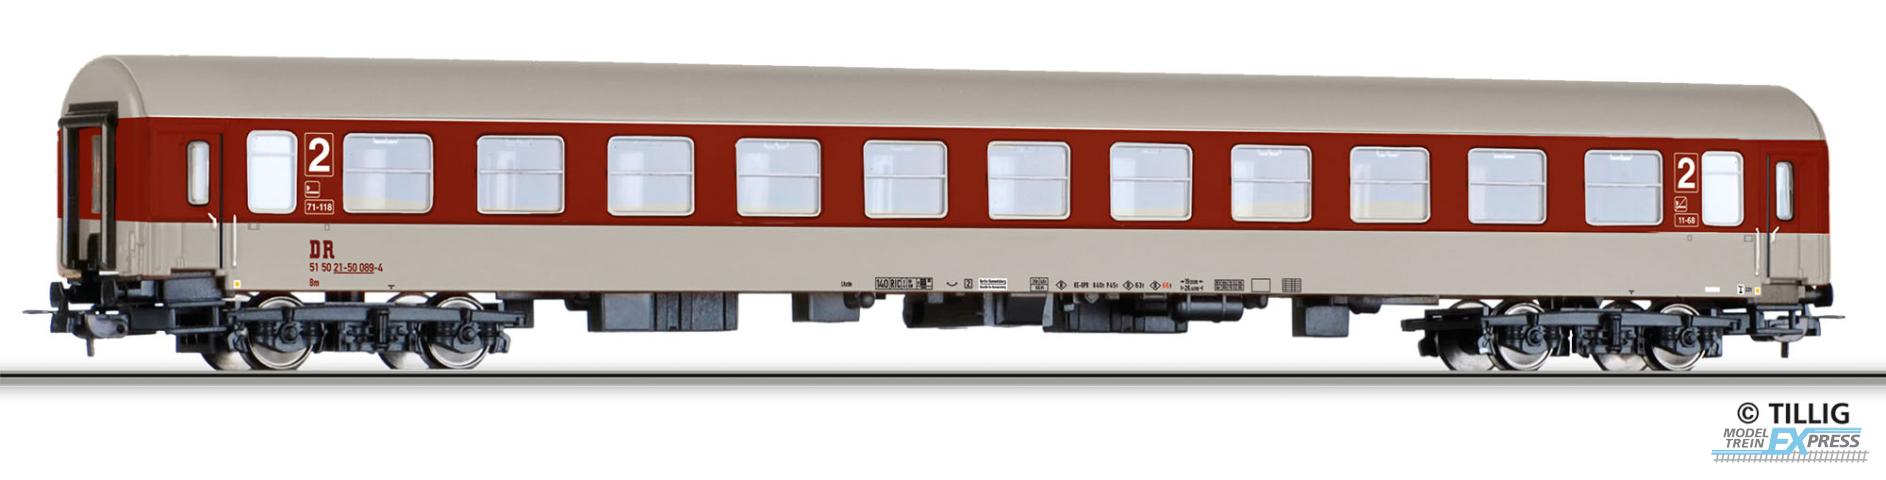 Tillig 74894 Reisezugwagen 2. Klasse Bm, Bauart Halberstadt, der DR, Ep. IV